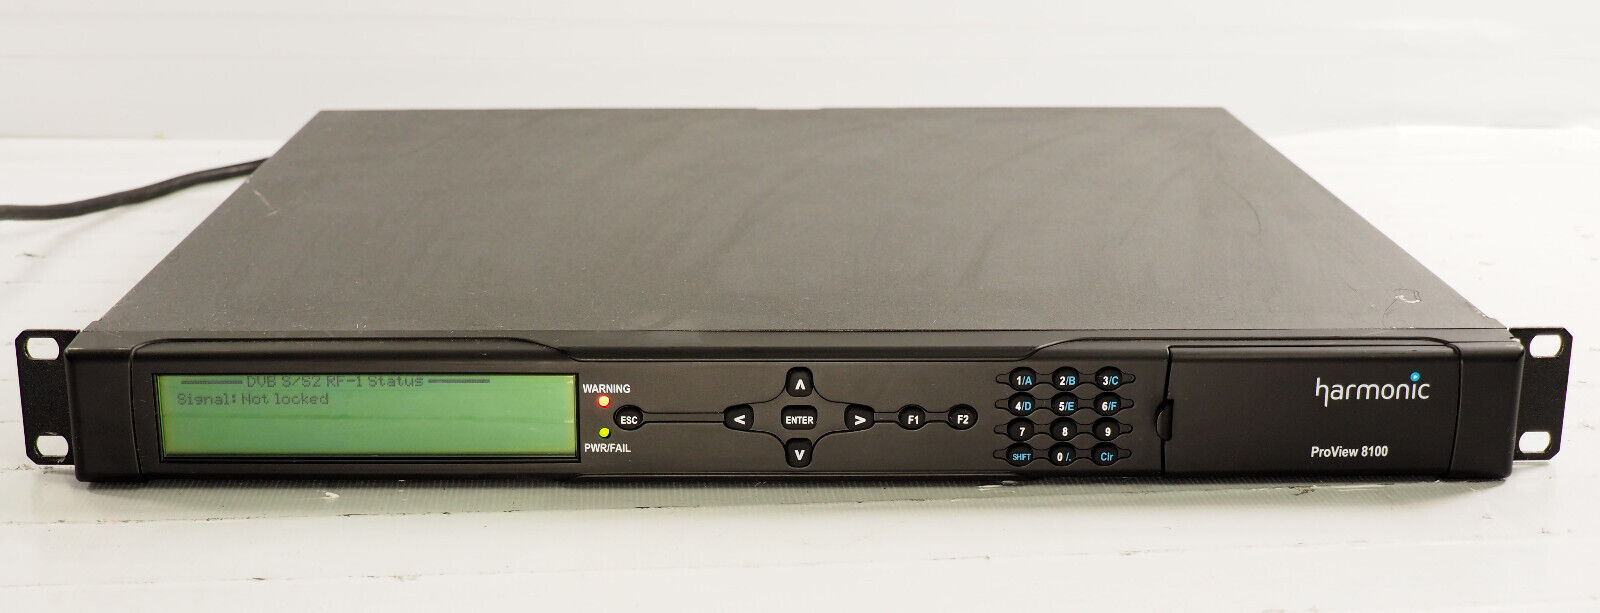 Harmonic Proview 8100 PVR-8K*201553 BNC SCALABLE RECEIVER DVB DESCRAMBLER VIDEO 